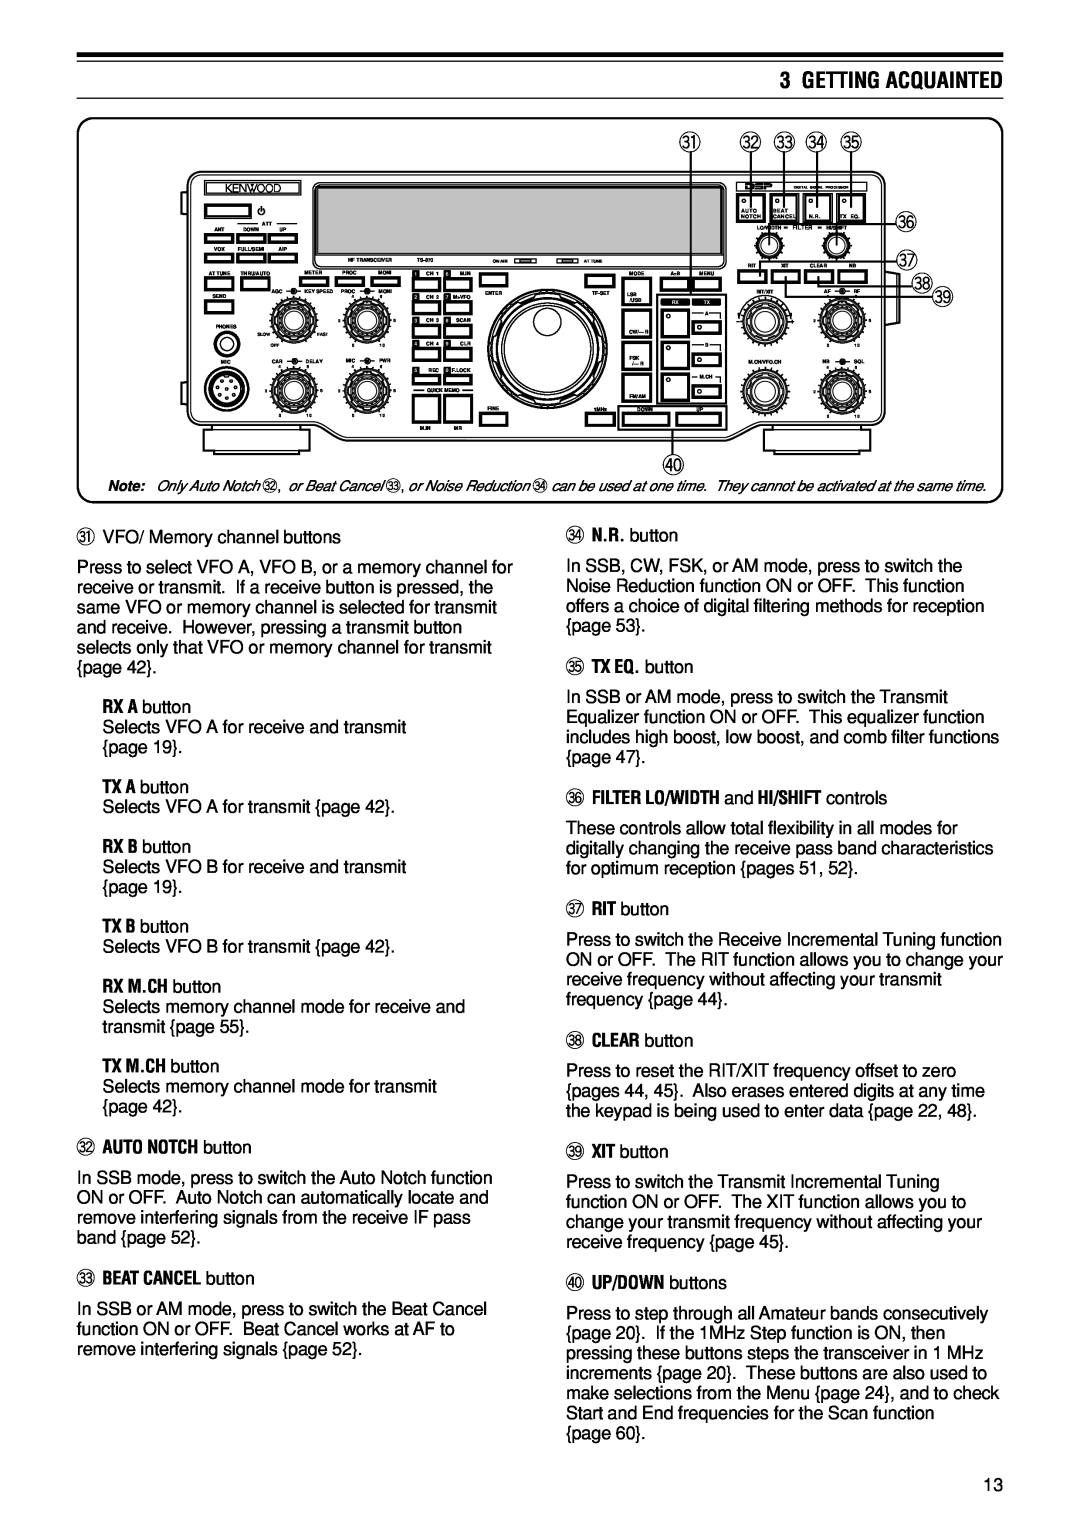 Kenwood TS-870S instruction manual #1 #2 #3#4 #5, Getting Acquainted 